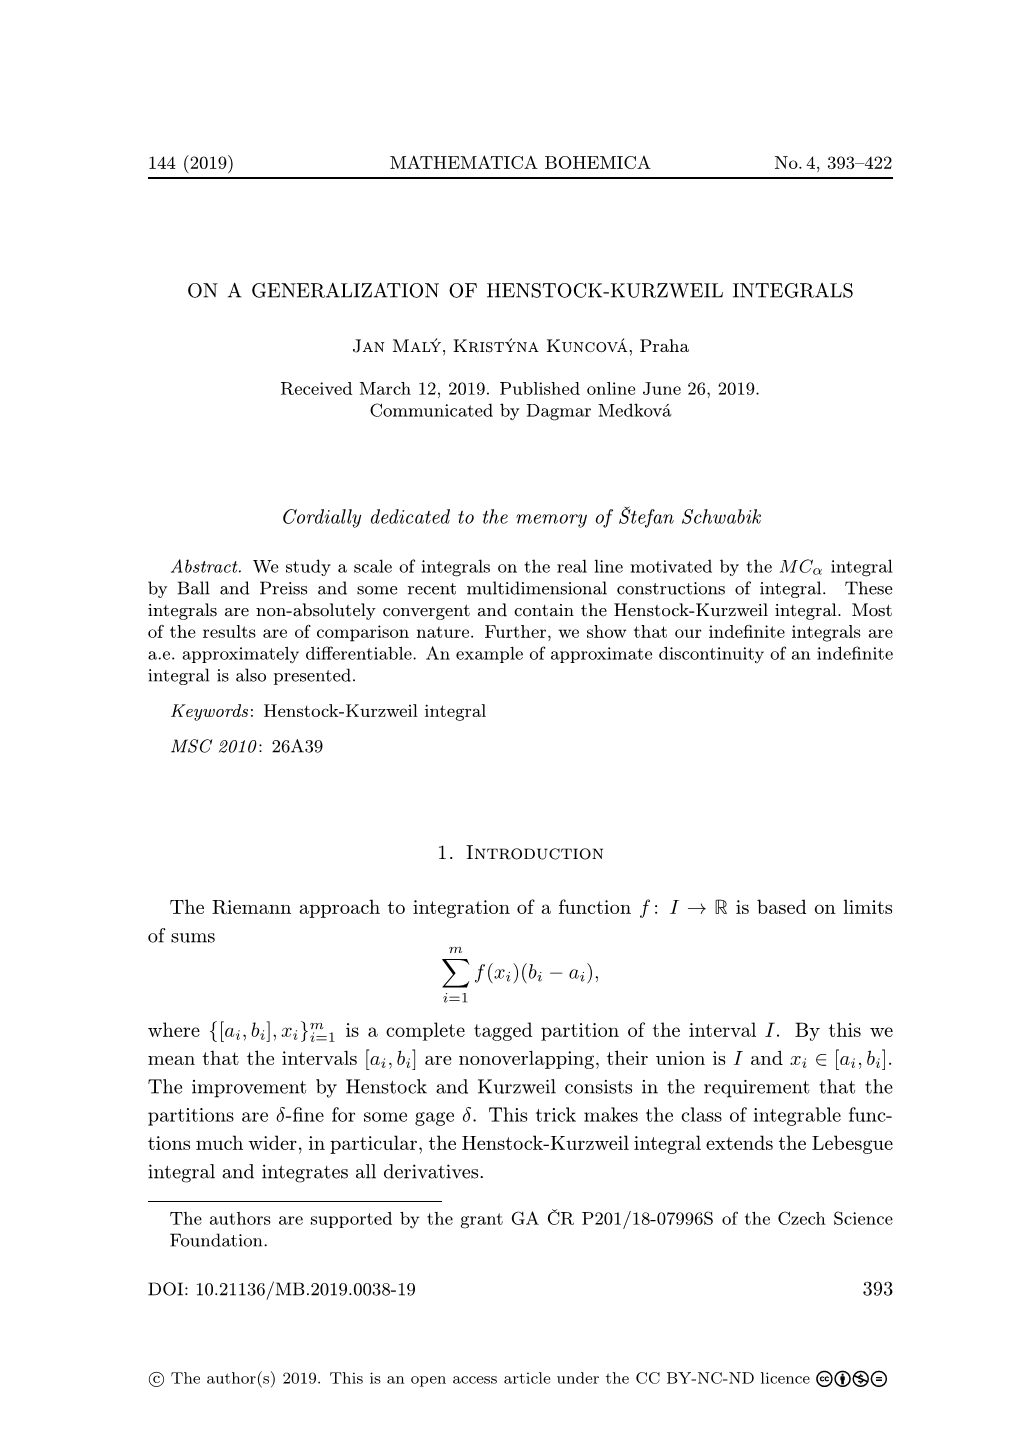 On a Generalization of Henstock-Kurzweil Integrals